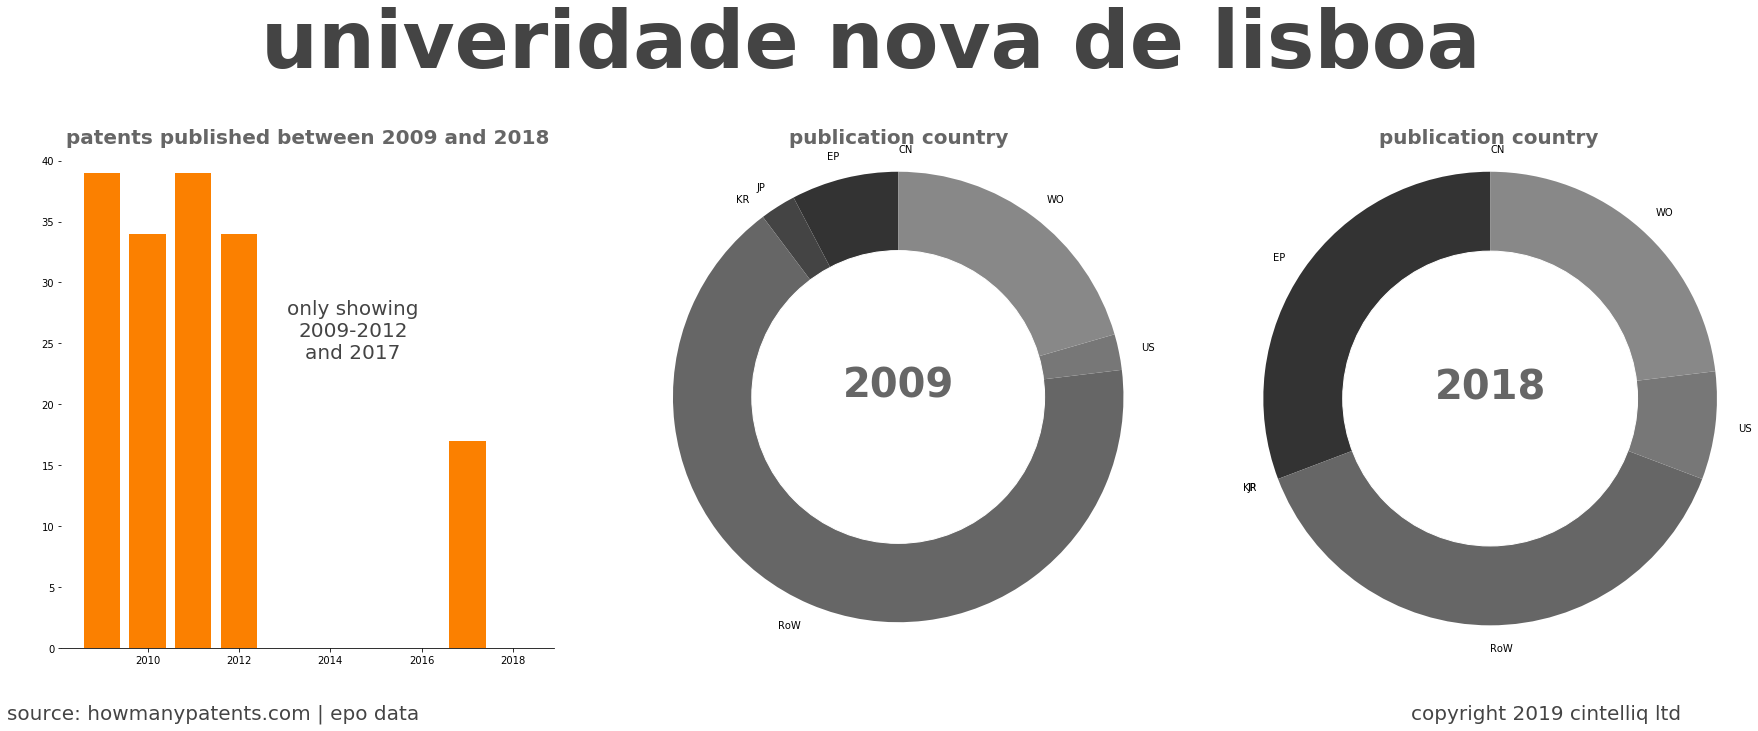 summary of patents for Univeridade Nova De Lisboa